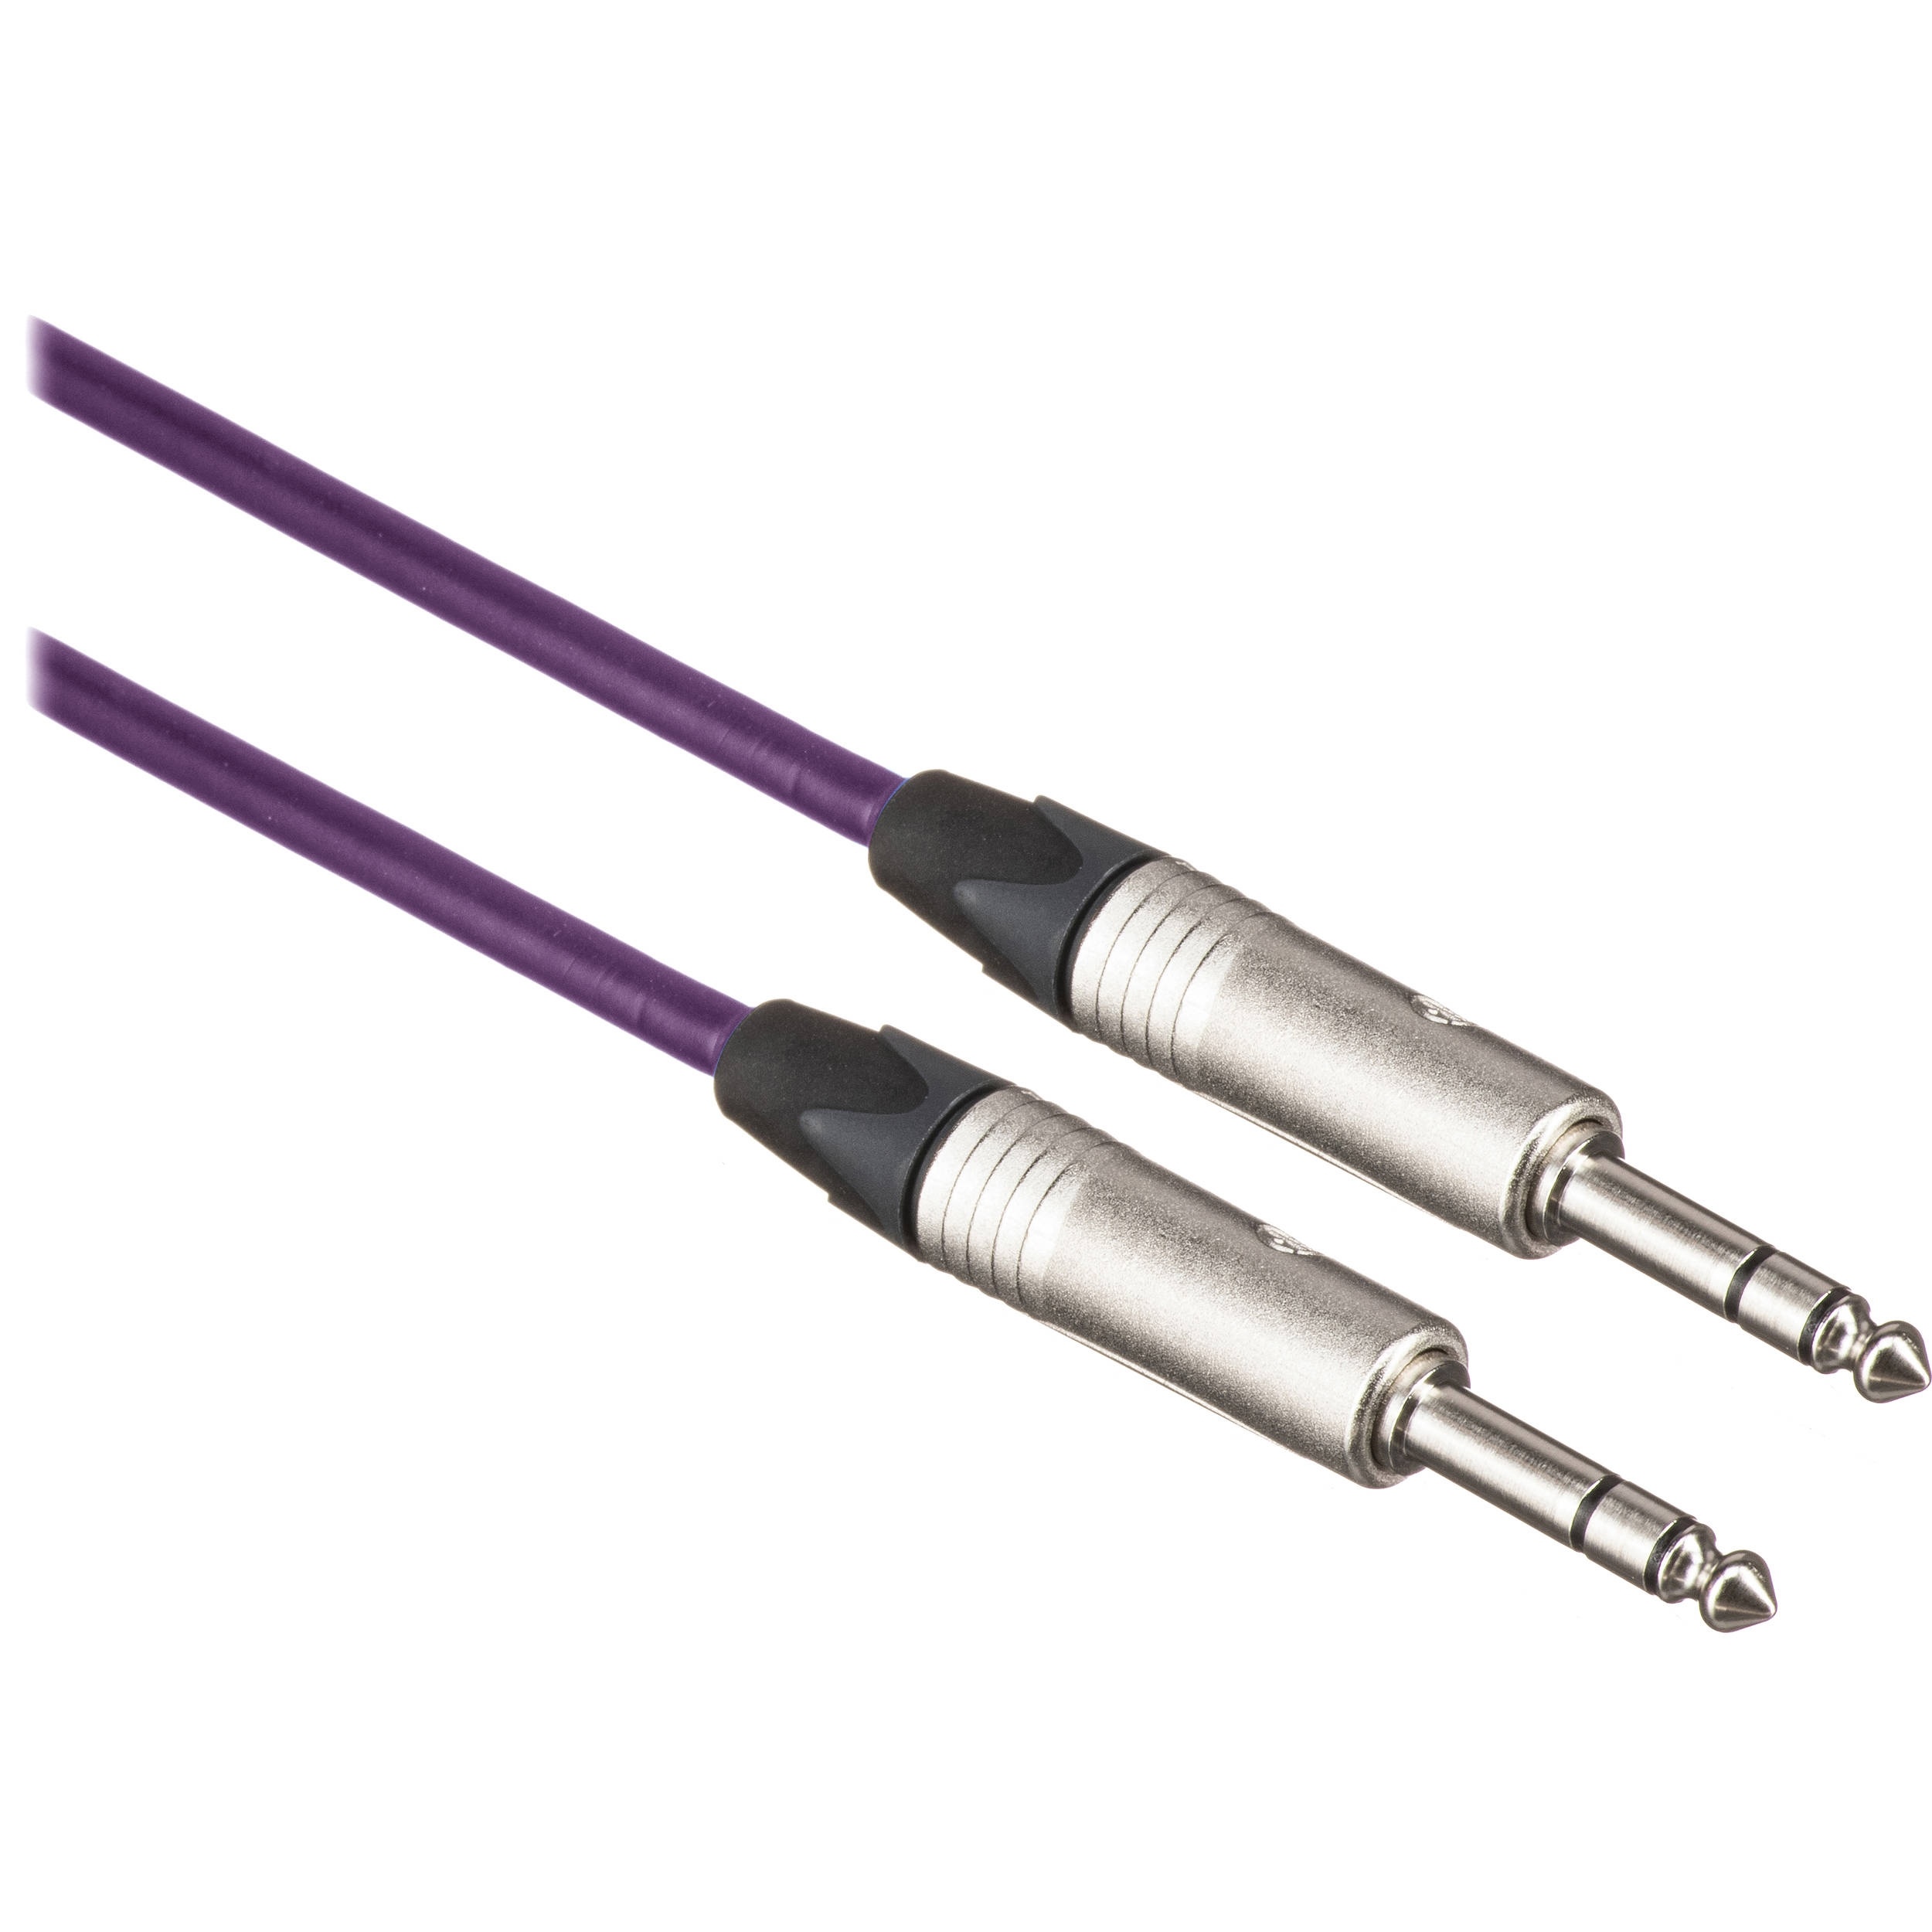 Canare Starquad TRSM-TRSM Cable (Purple, 2')